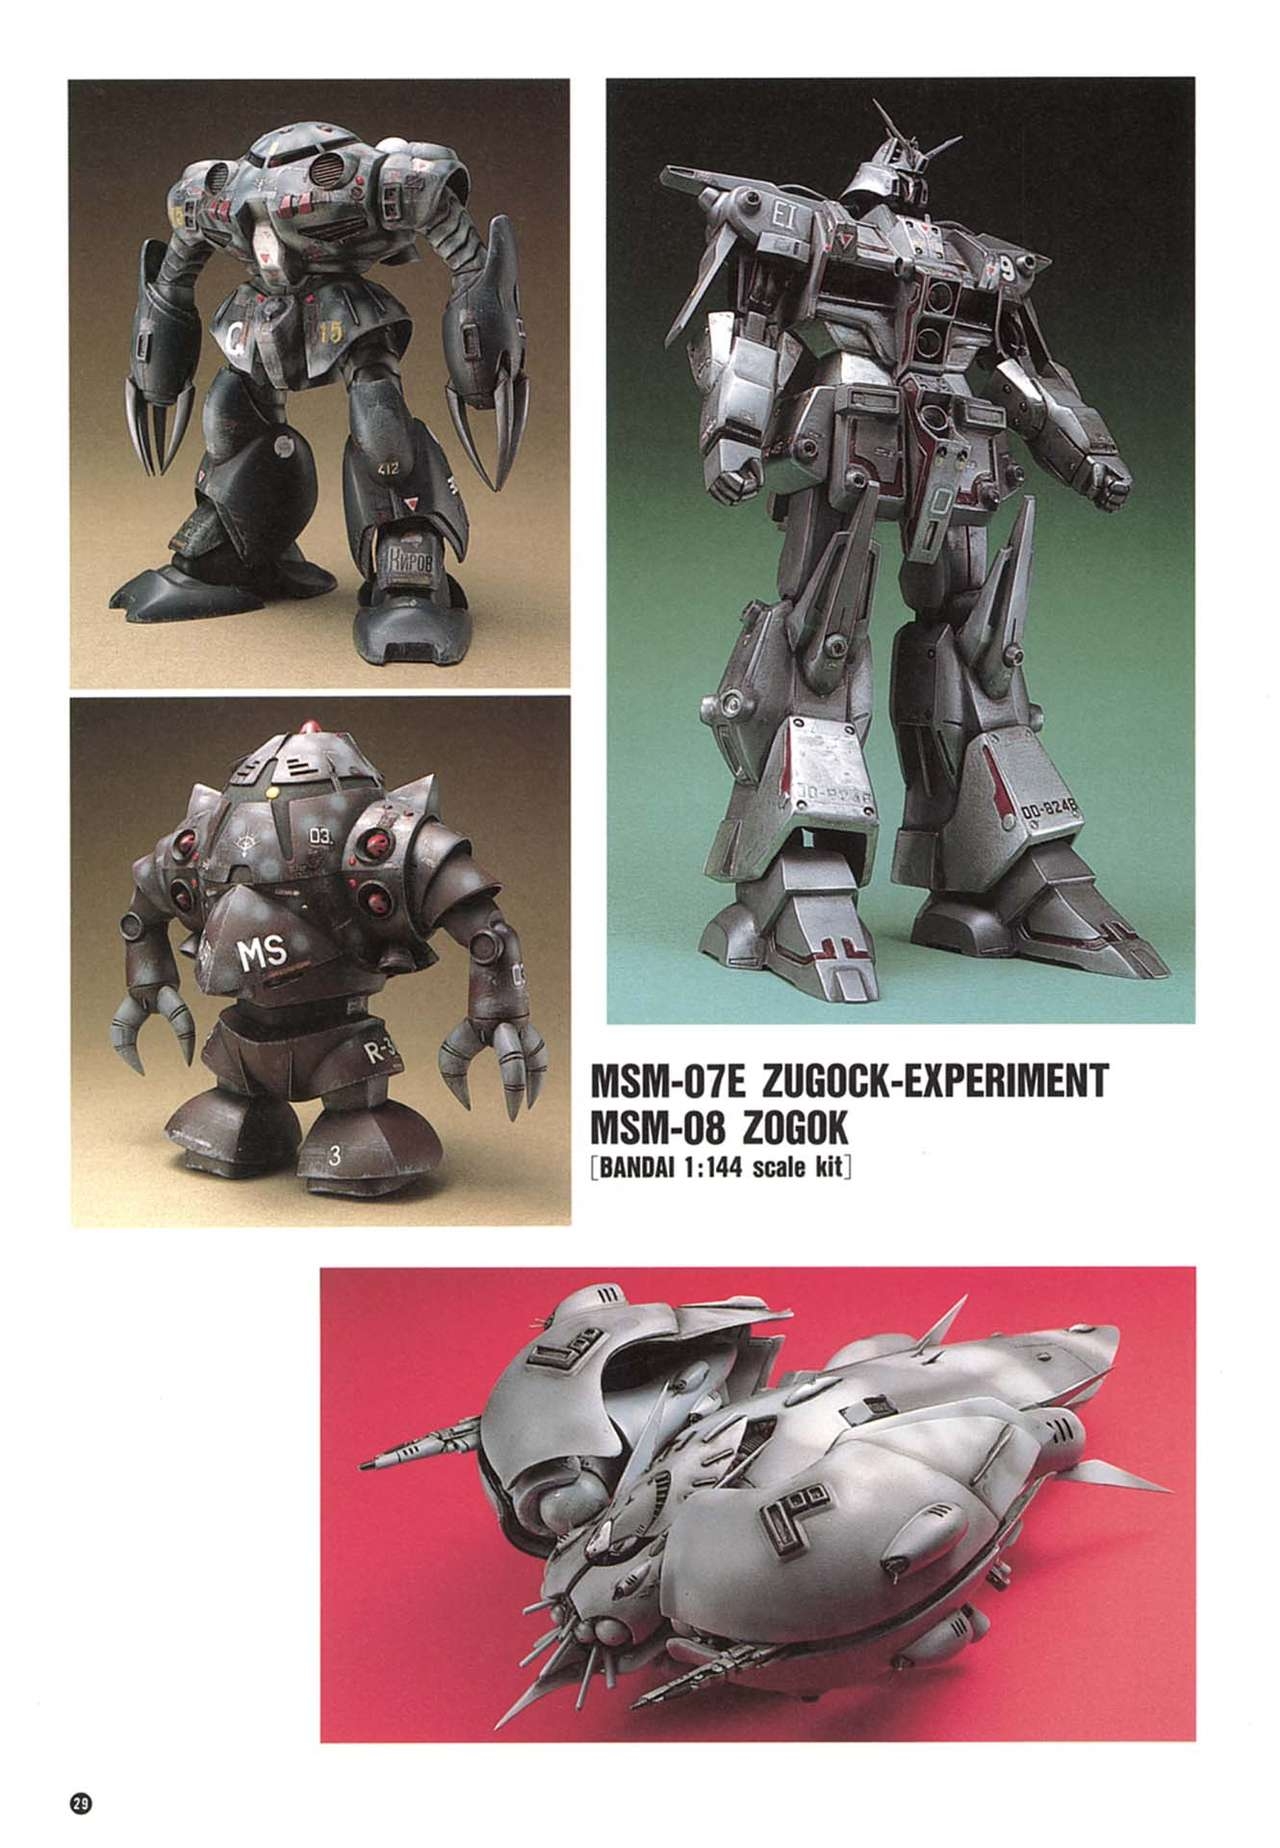 [Kazuhisa Kondo] Kazuhisa Kondo 2D & 3D Works - Go Ahead - From Mobile Suit Gundam to Original Mechanism 28